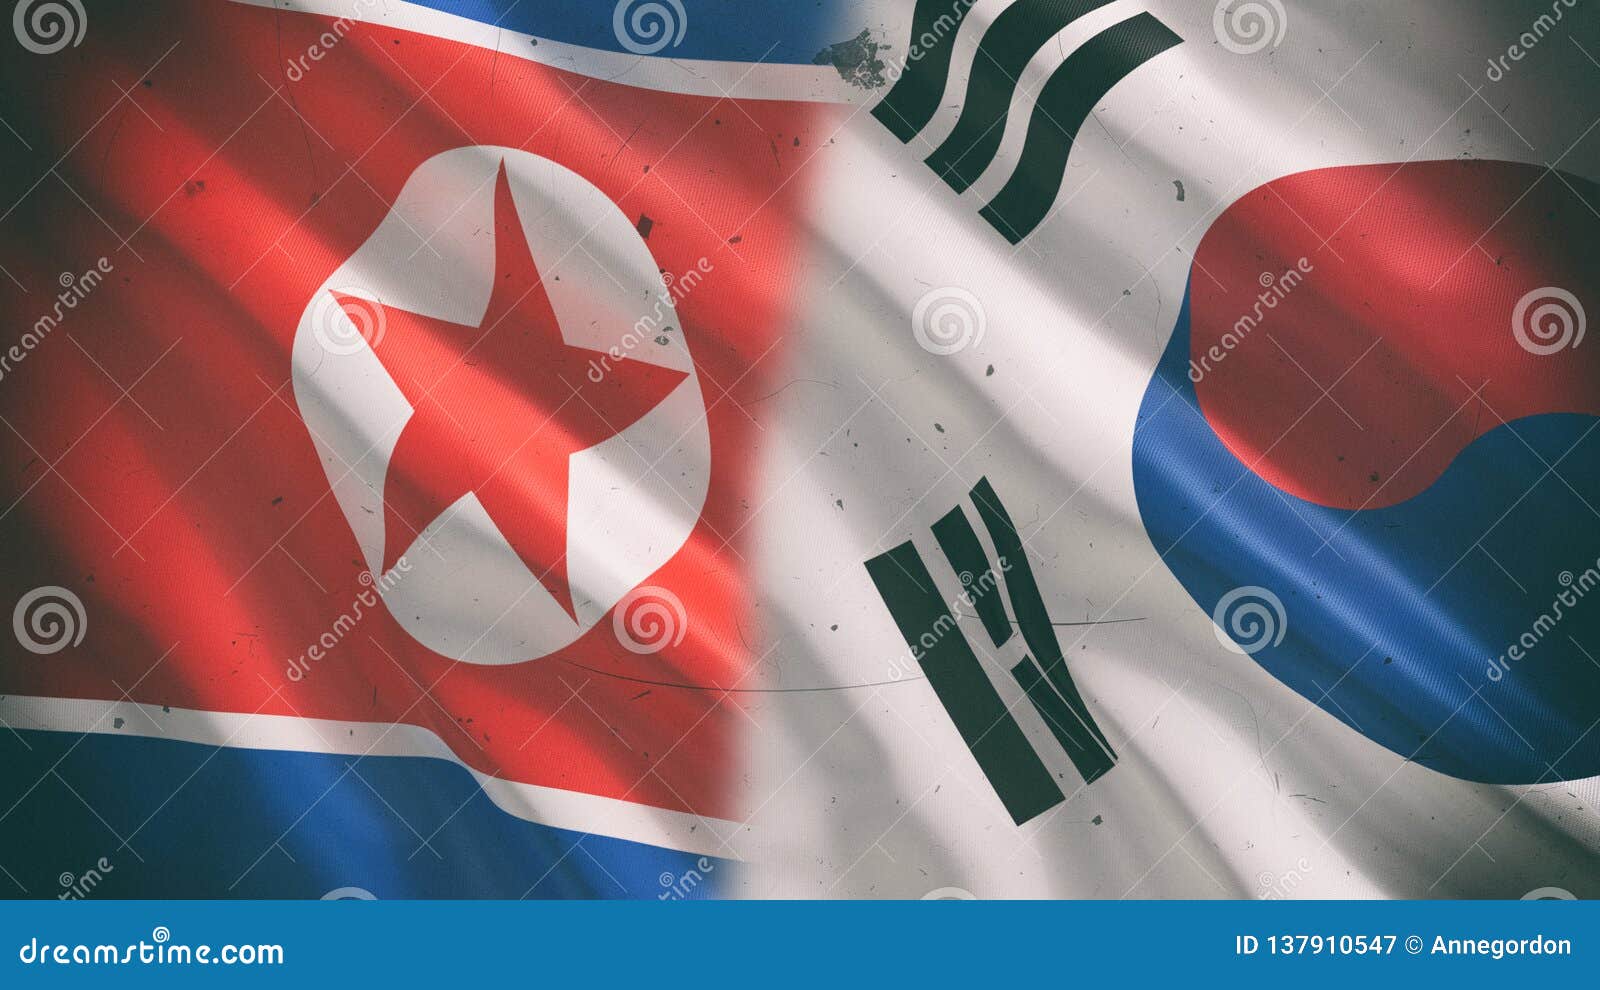 south and north korea flag